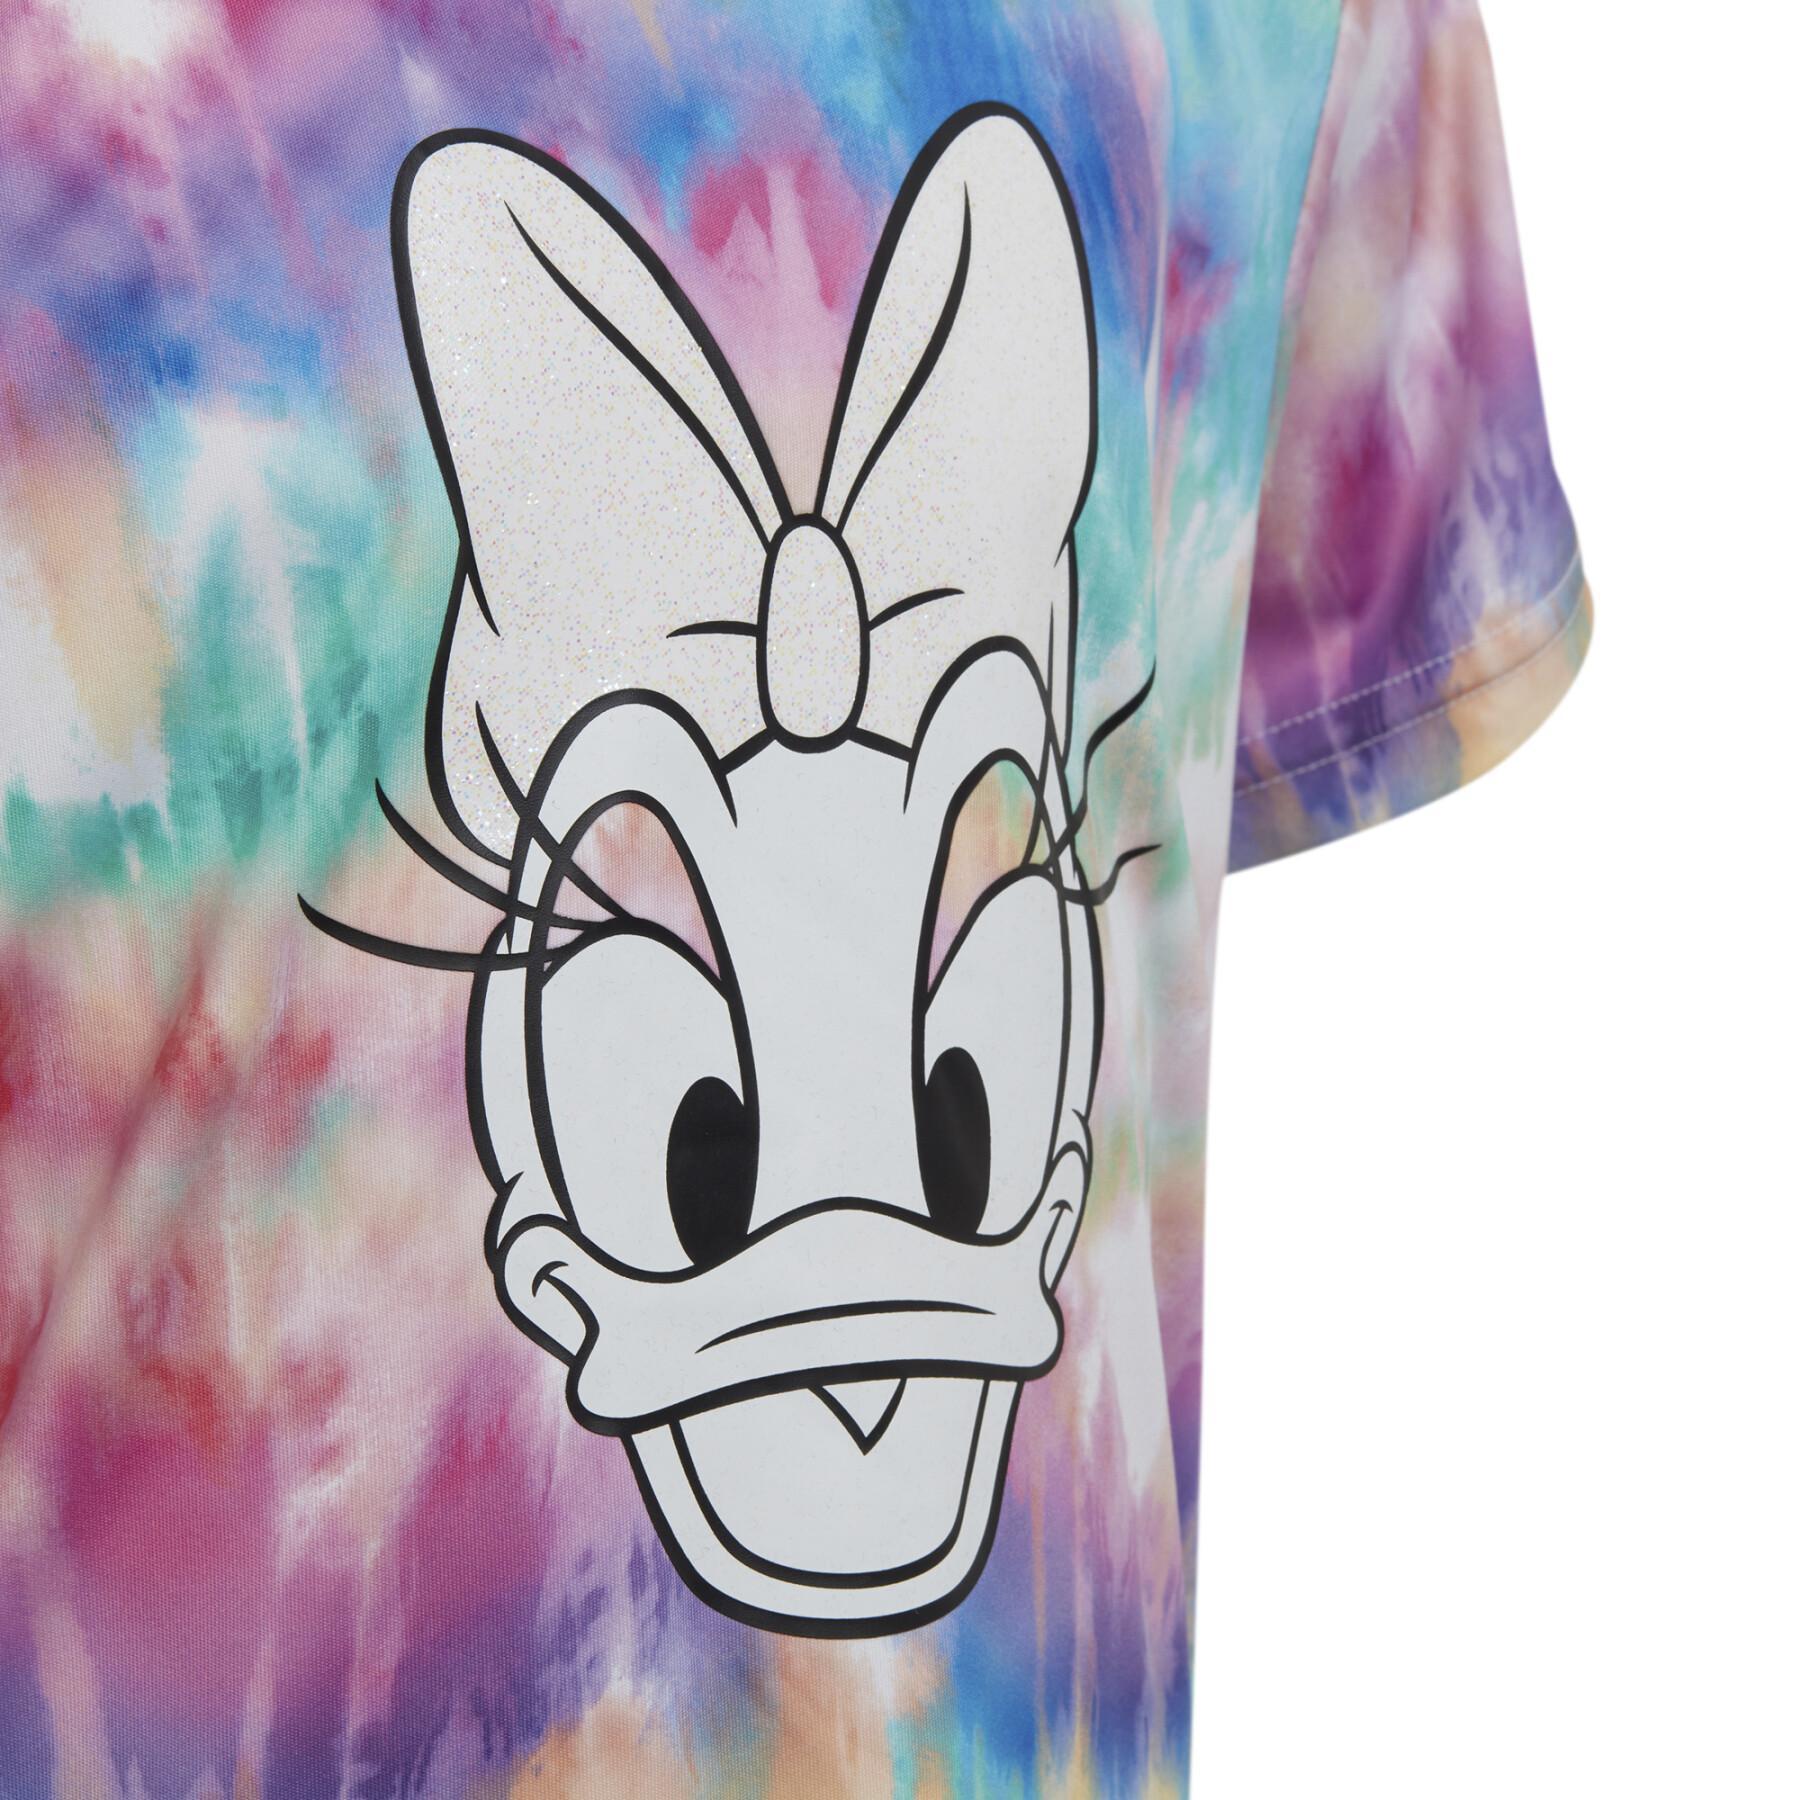 Girl's T-shirt adidas Disney Daisy Duck